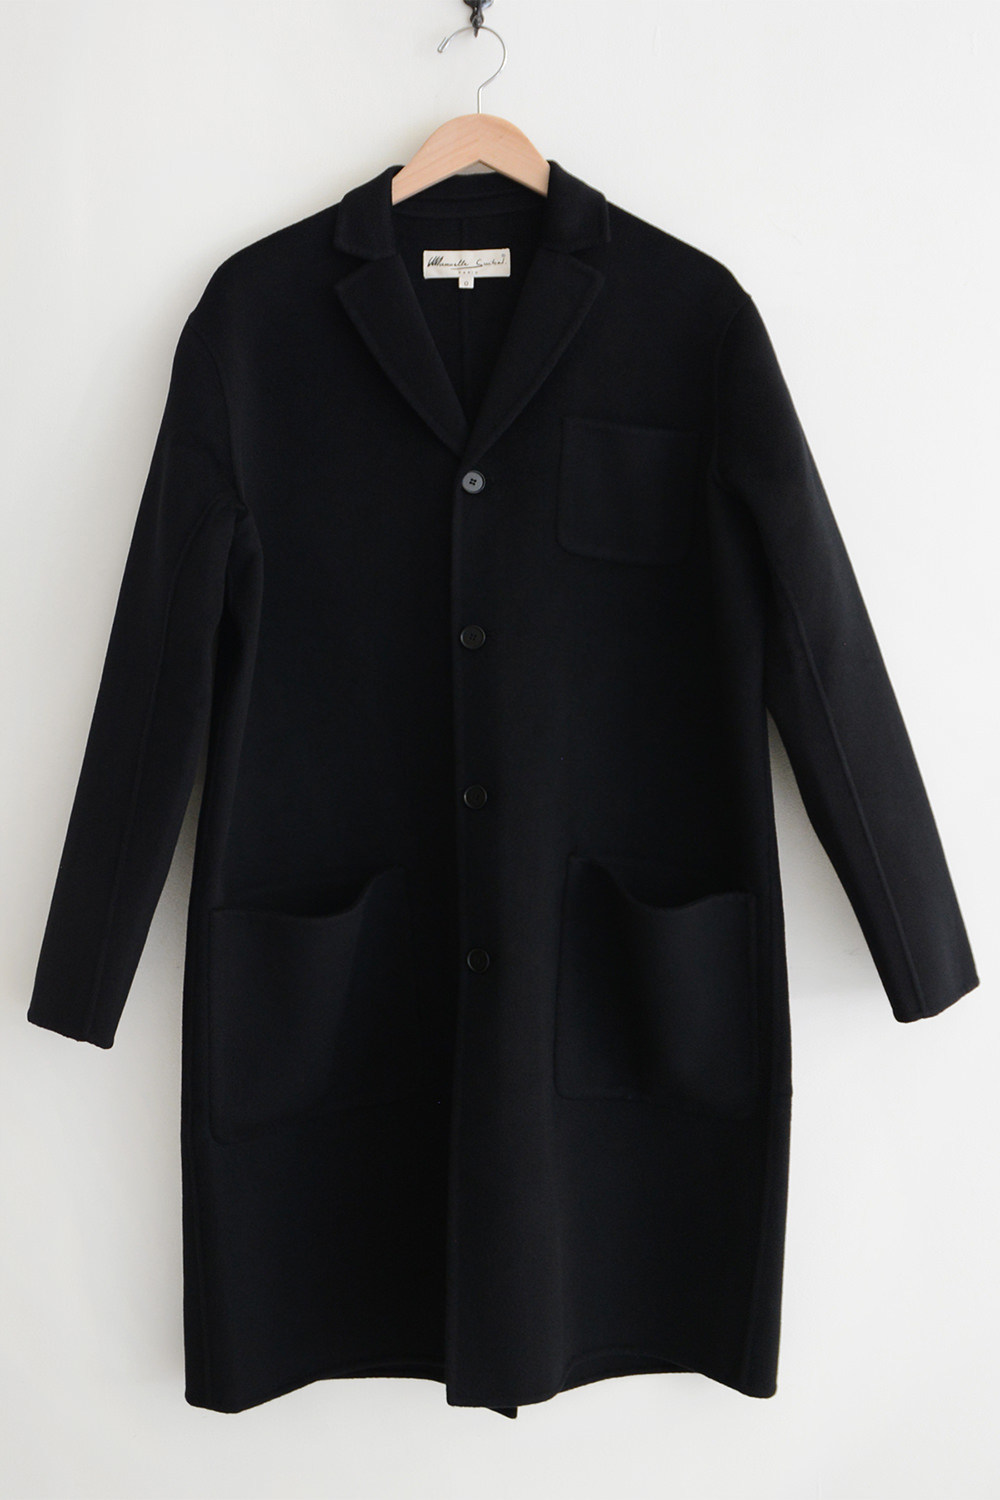 manuelle guibal 6535 cashmere coat top picture